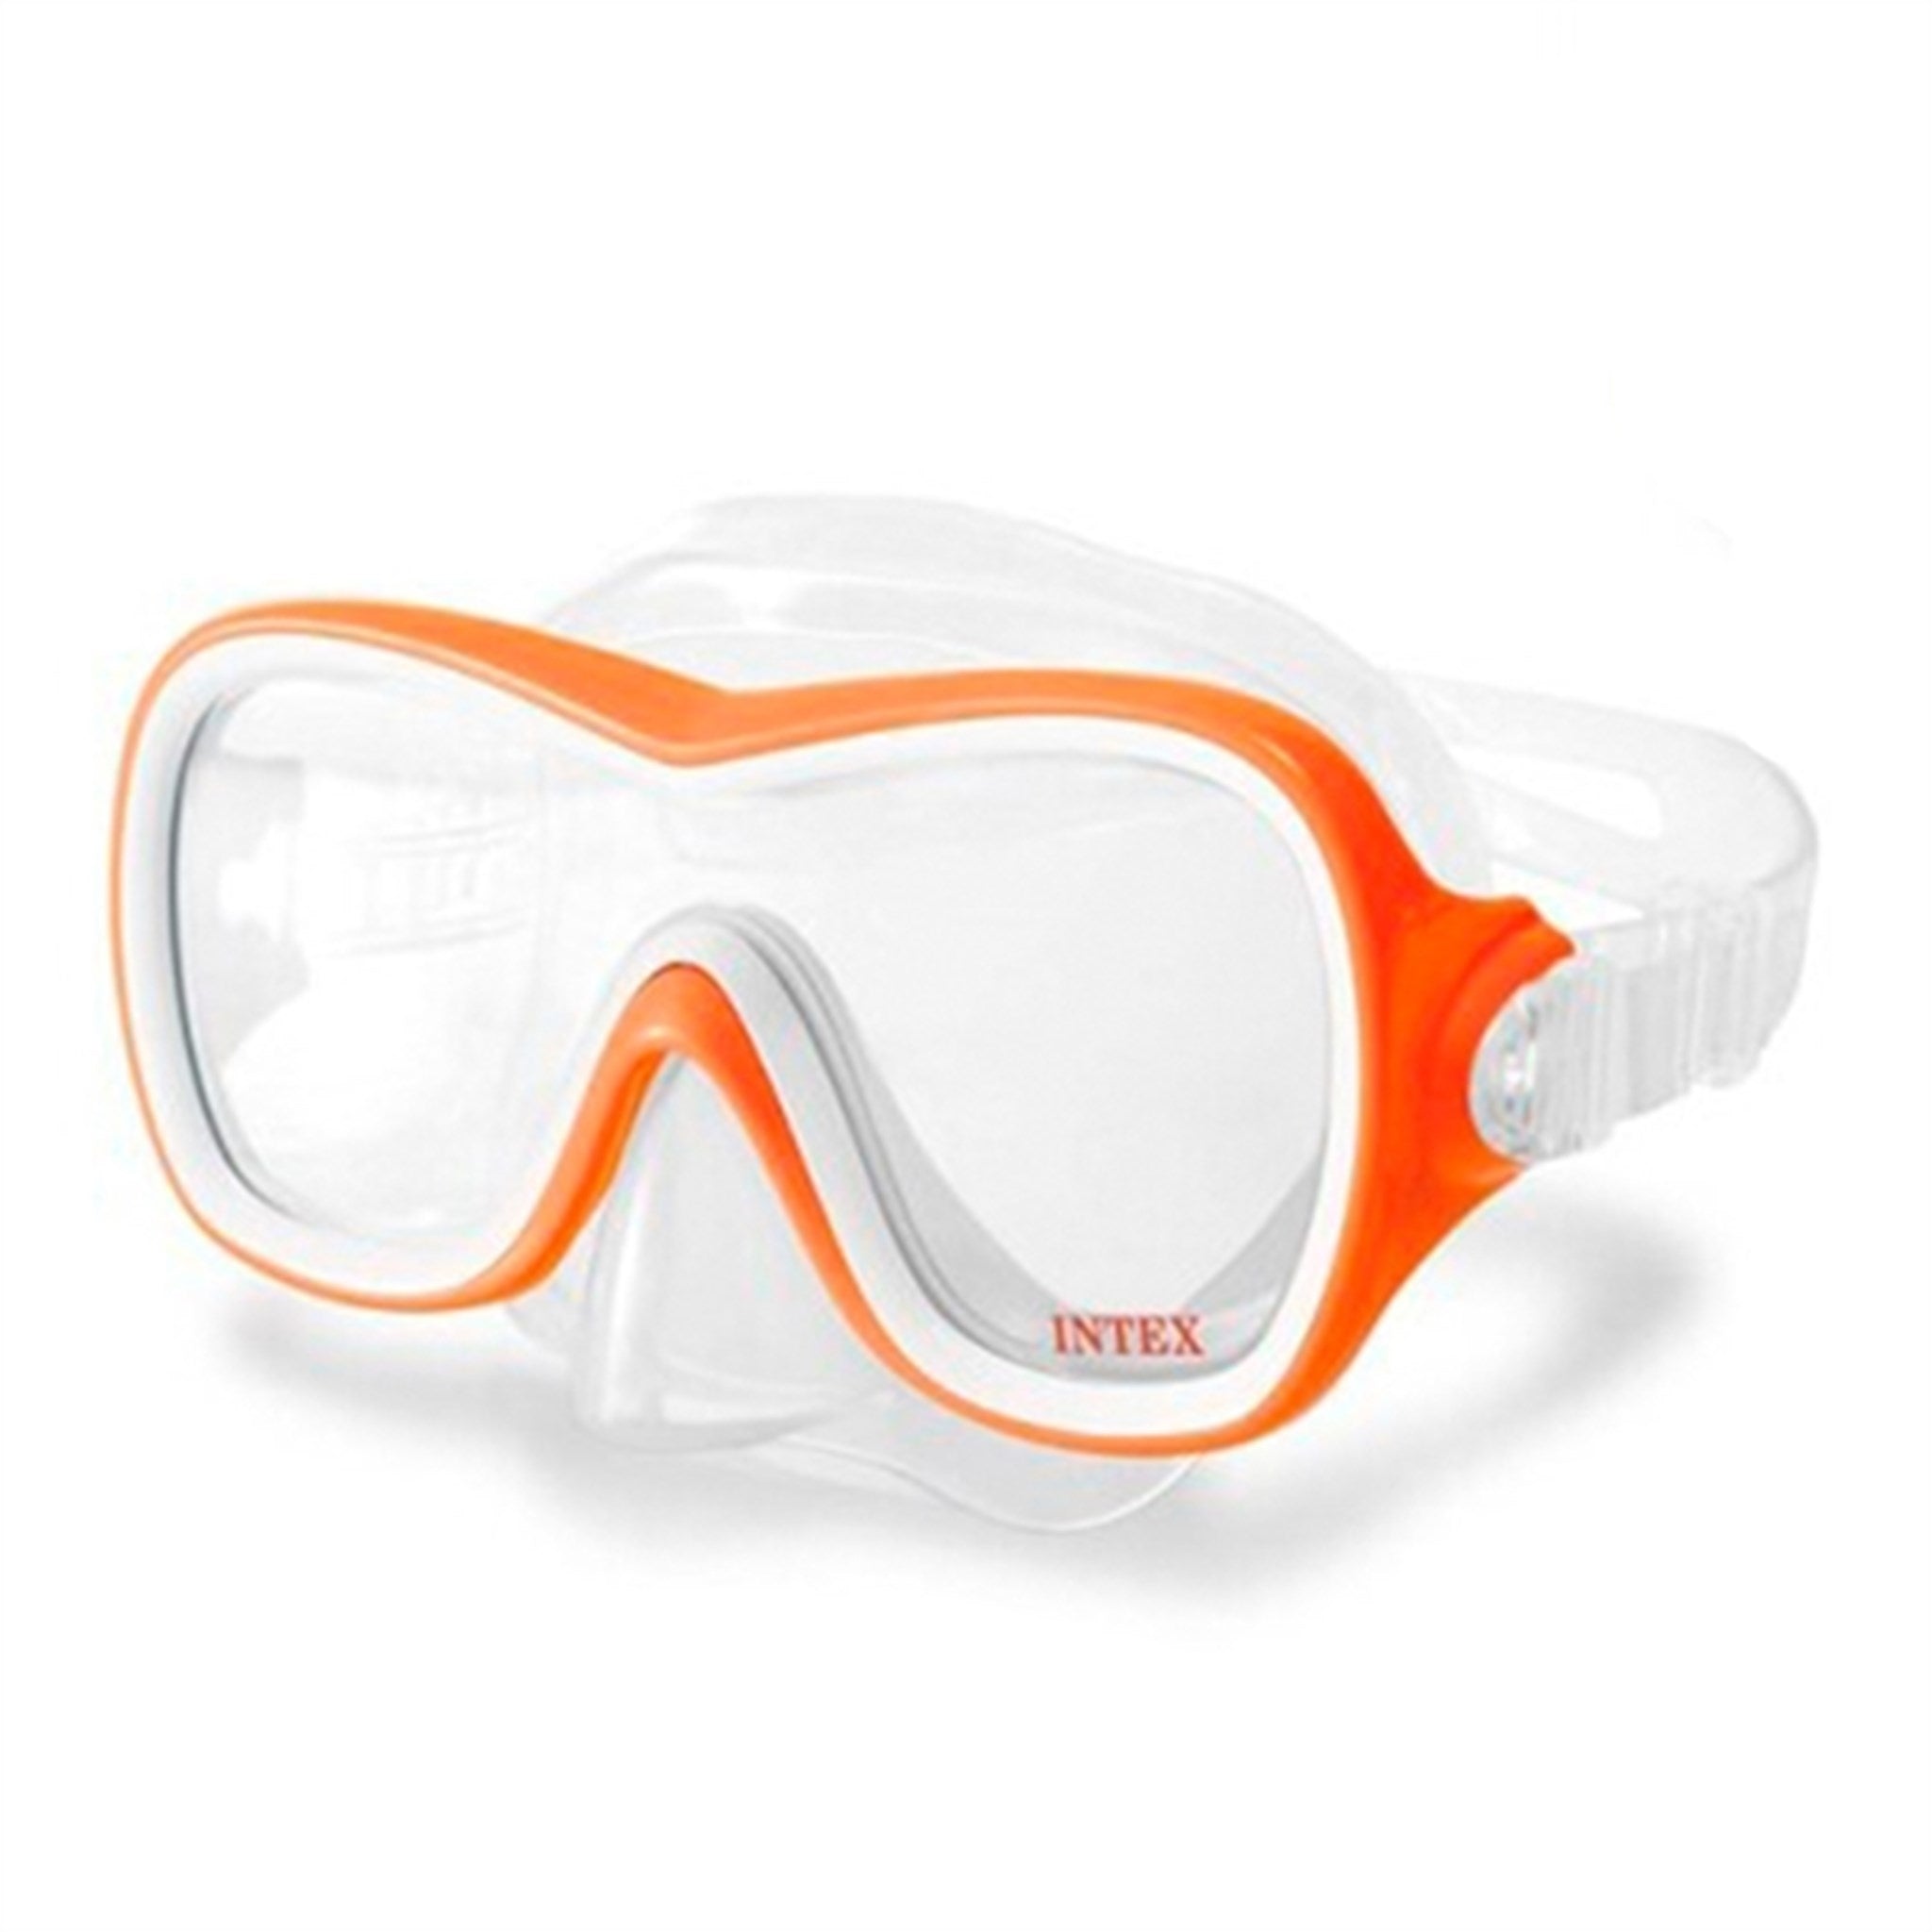 INTEX® Wave Rider Mask Orange